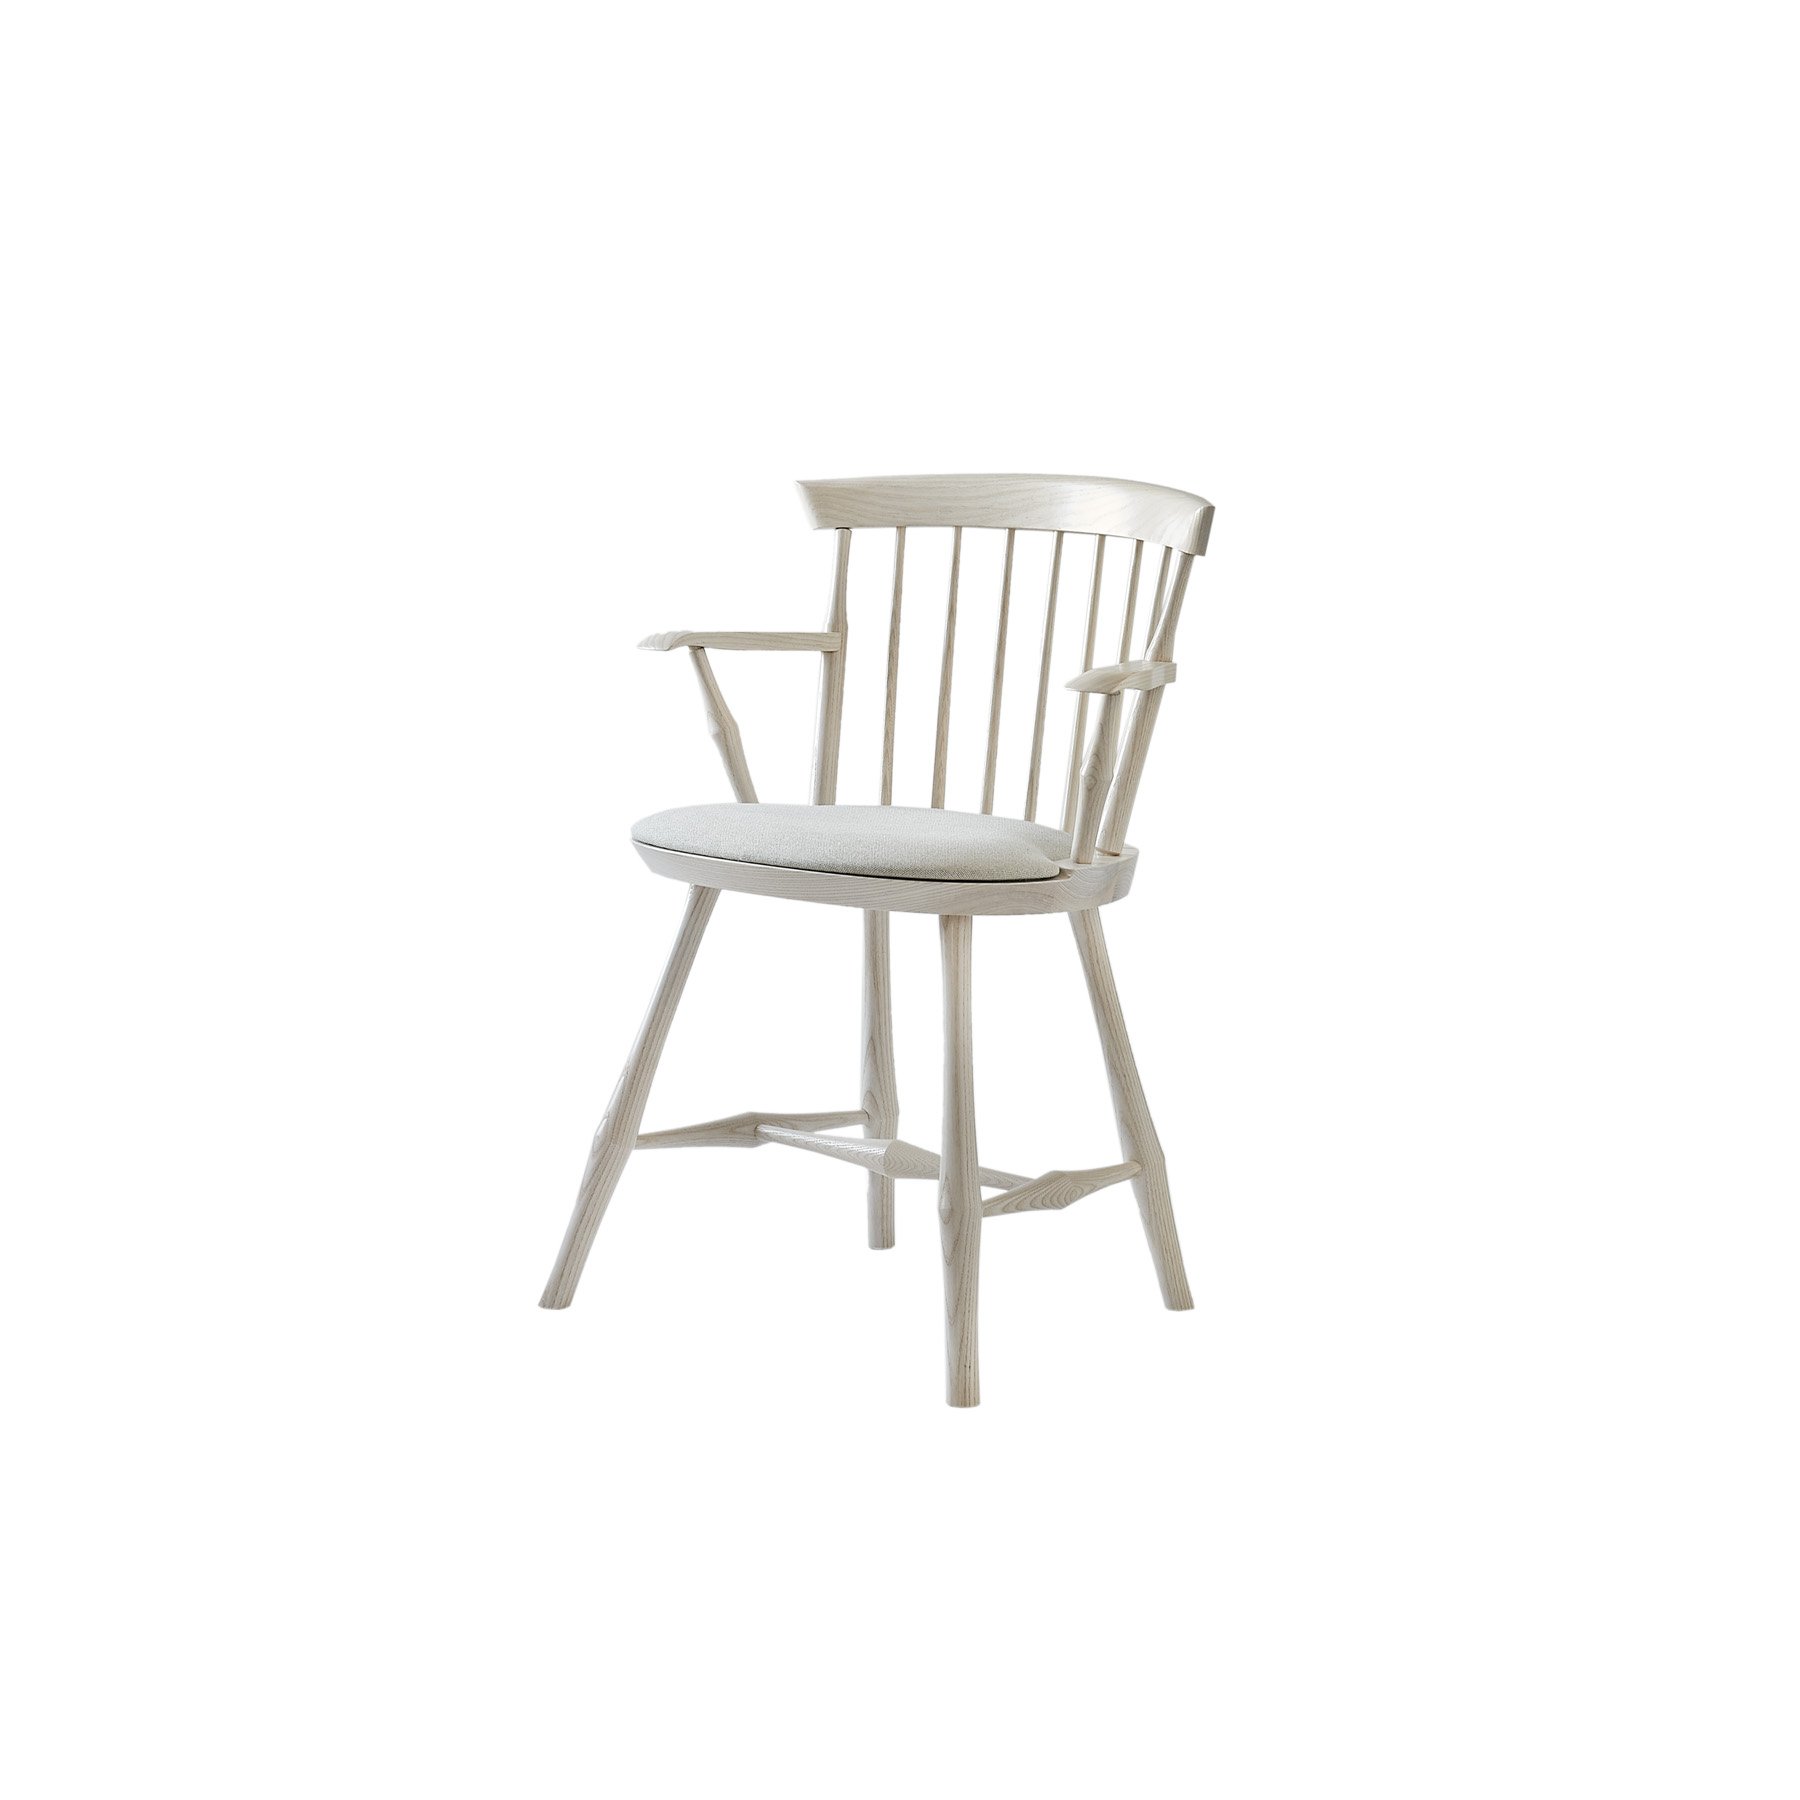 upholstered wayland lowback arm chair.jpg